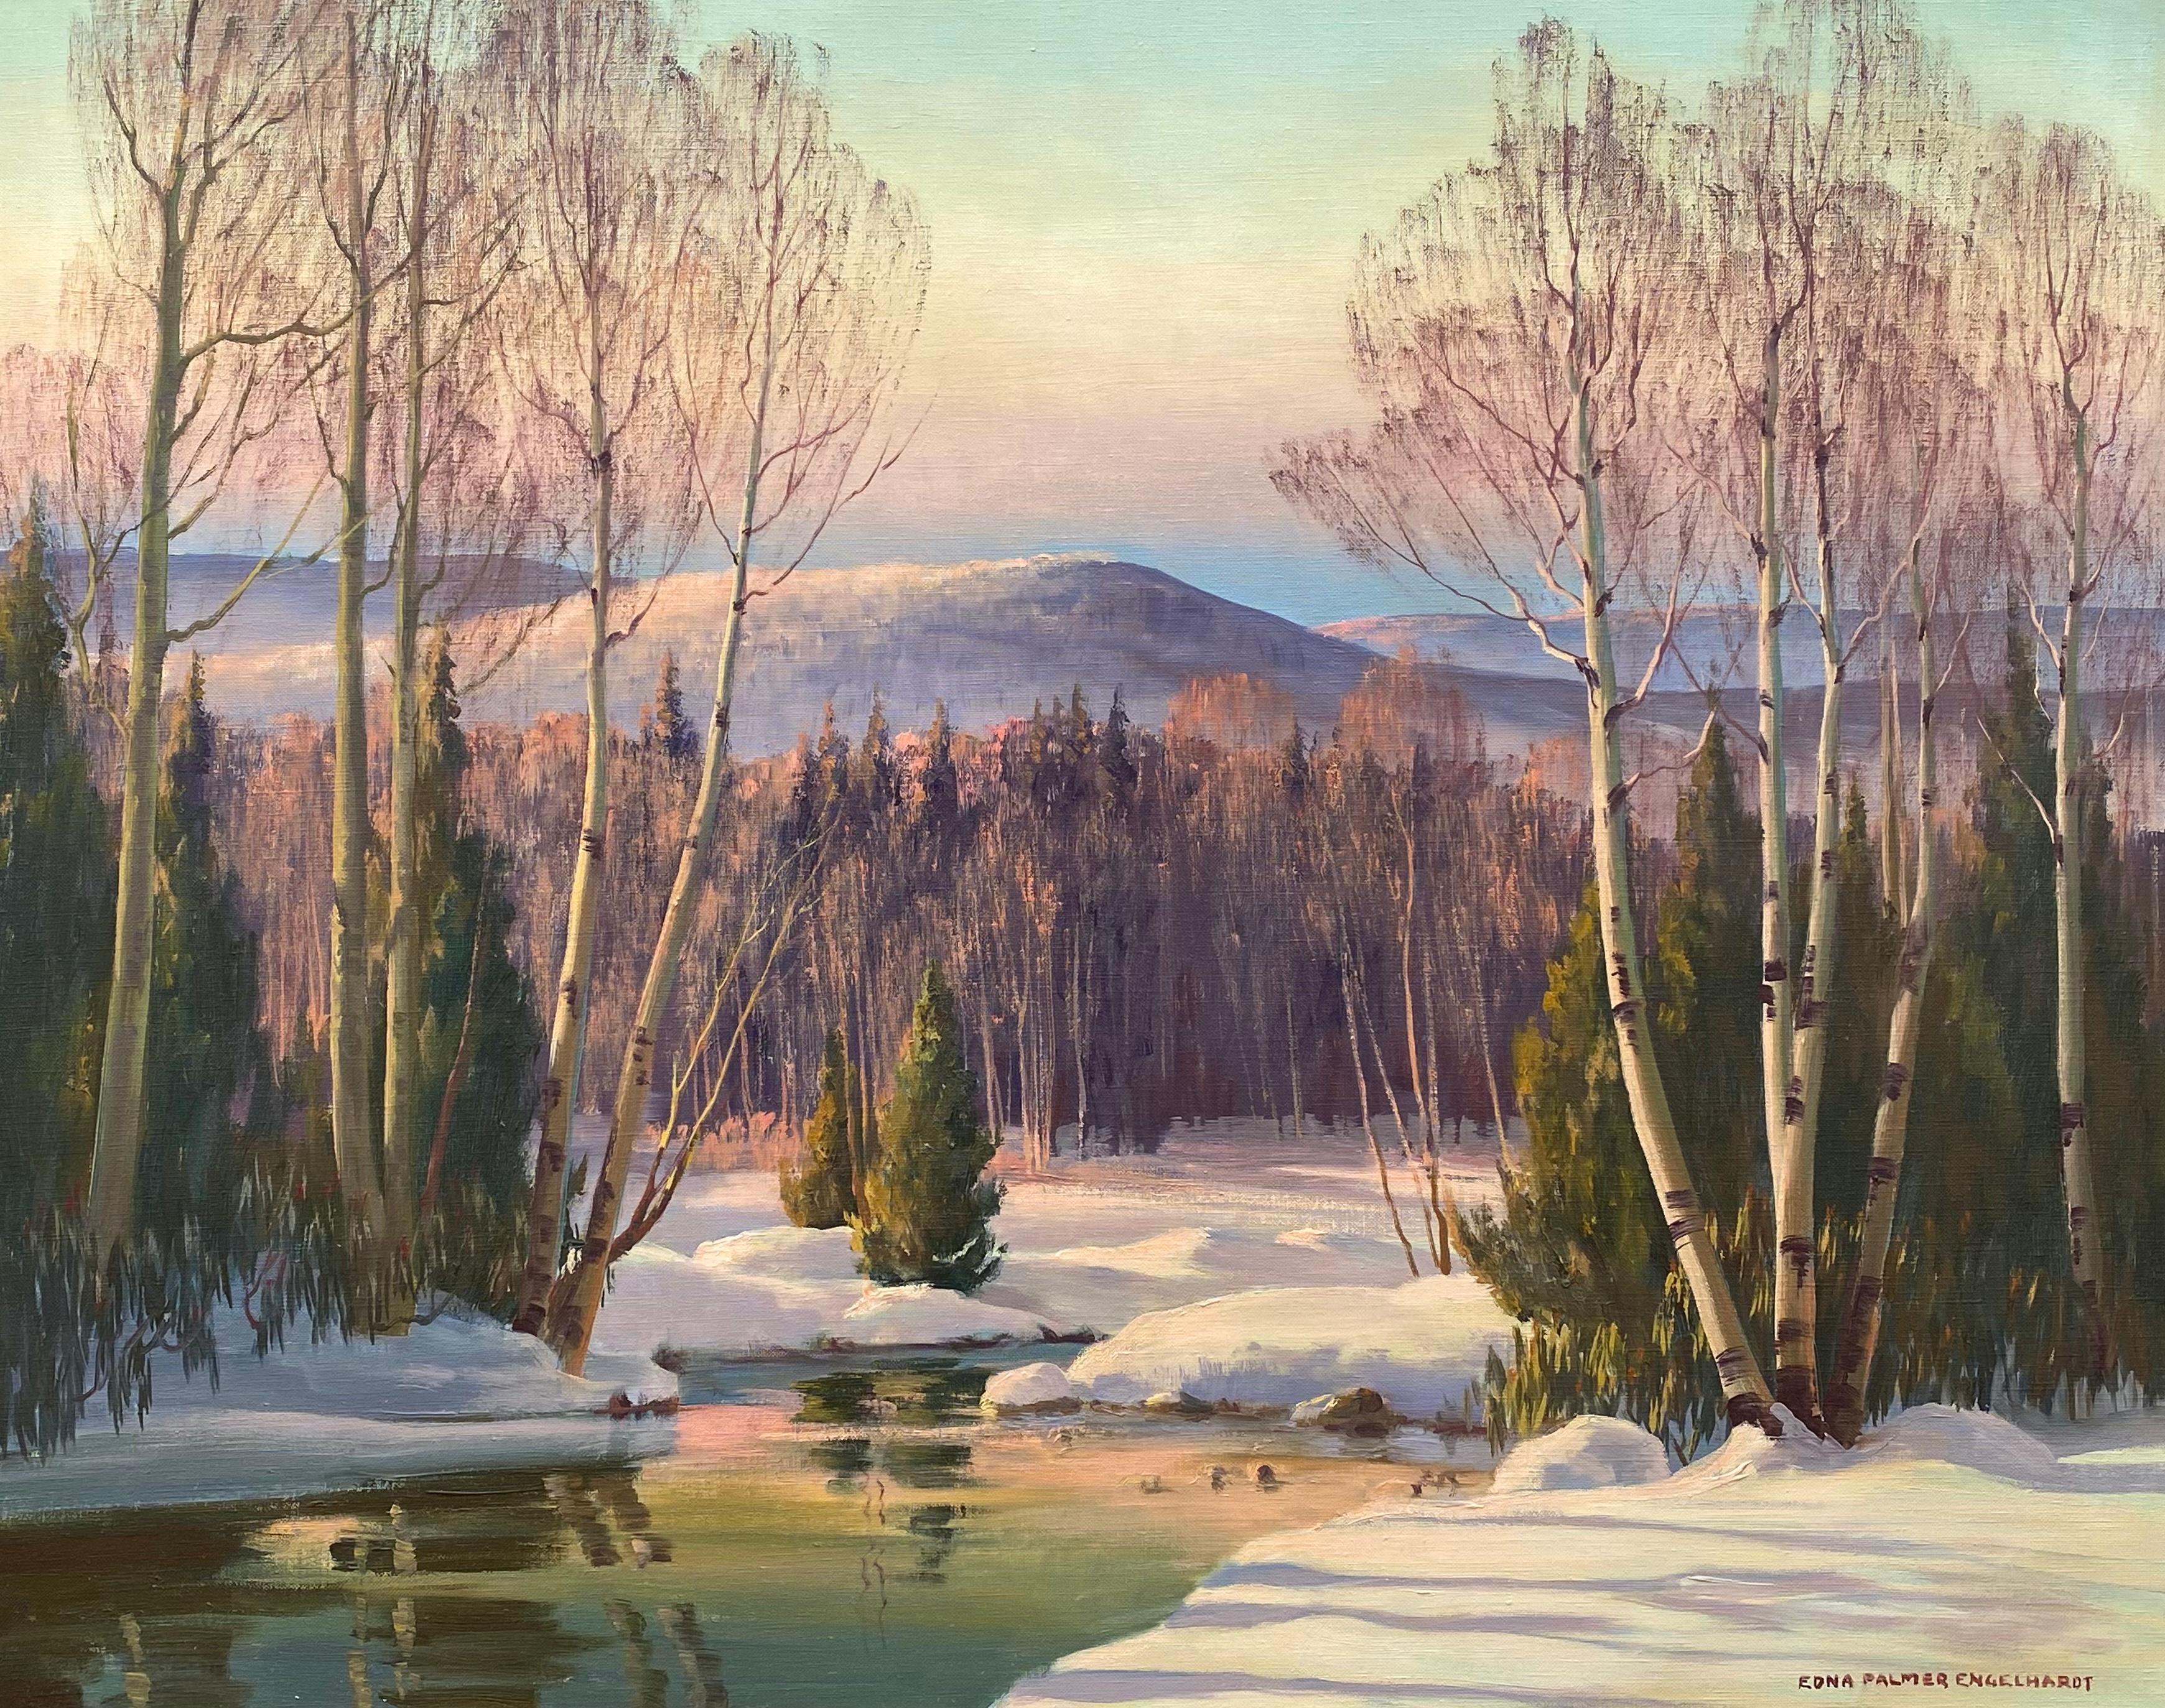 Edna Palmer Engelhardt Landscape Painting - “Winter’s Hills and Streams”